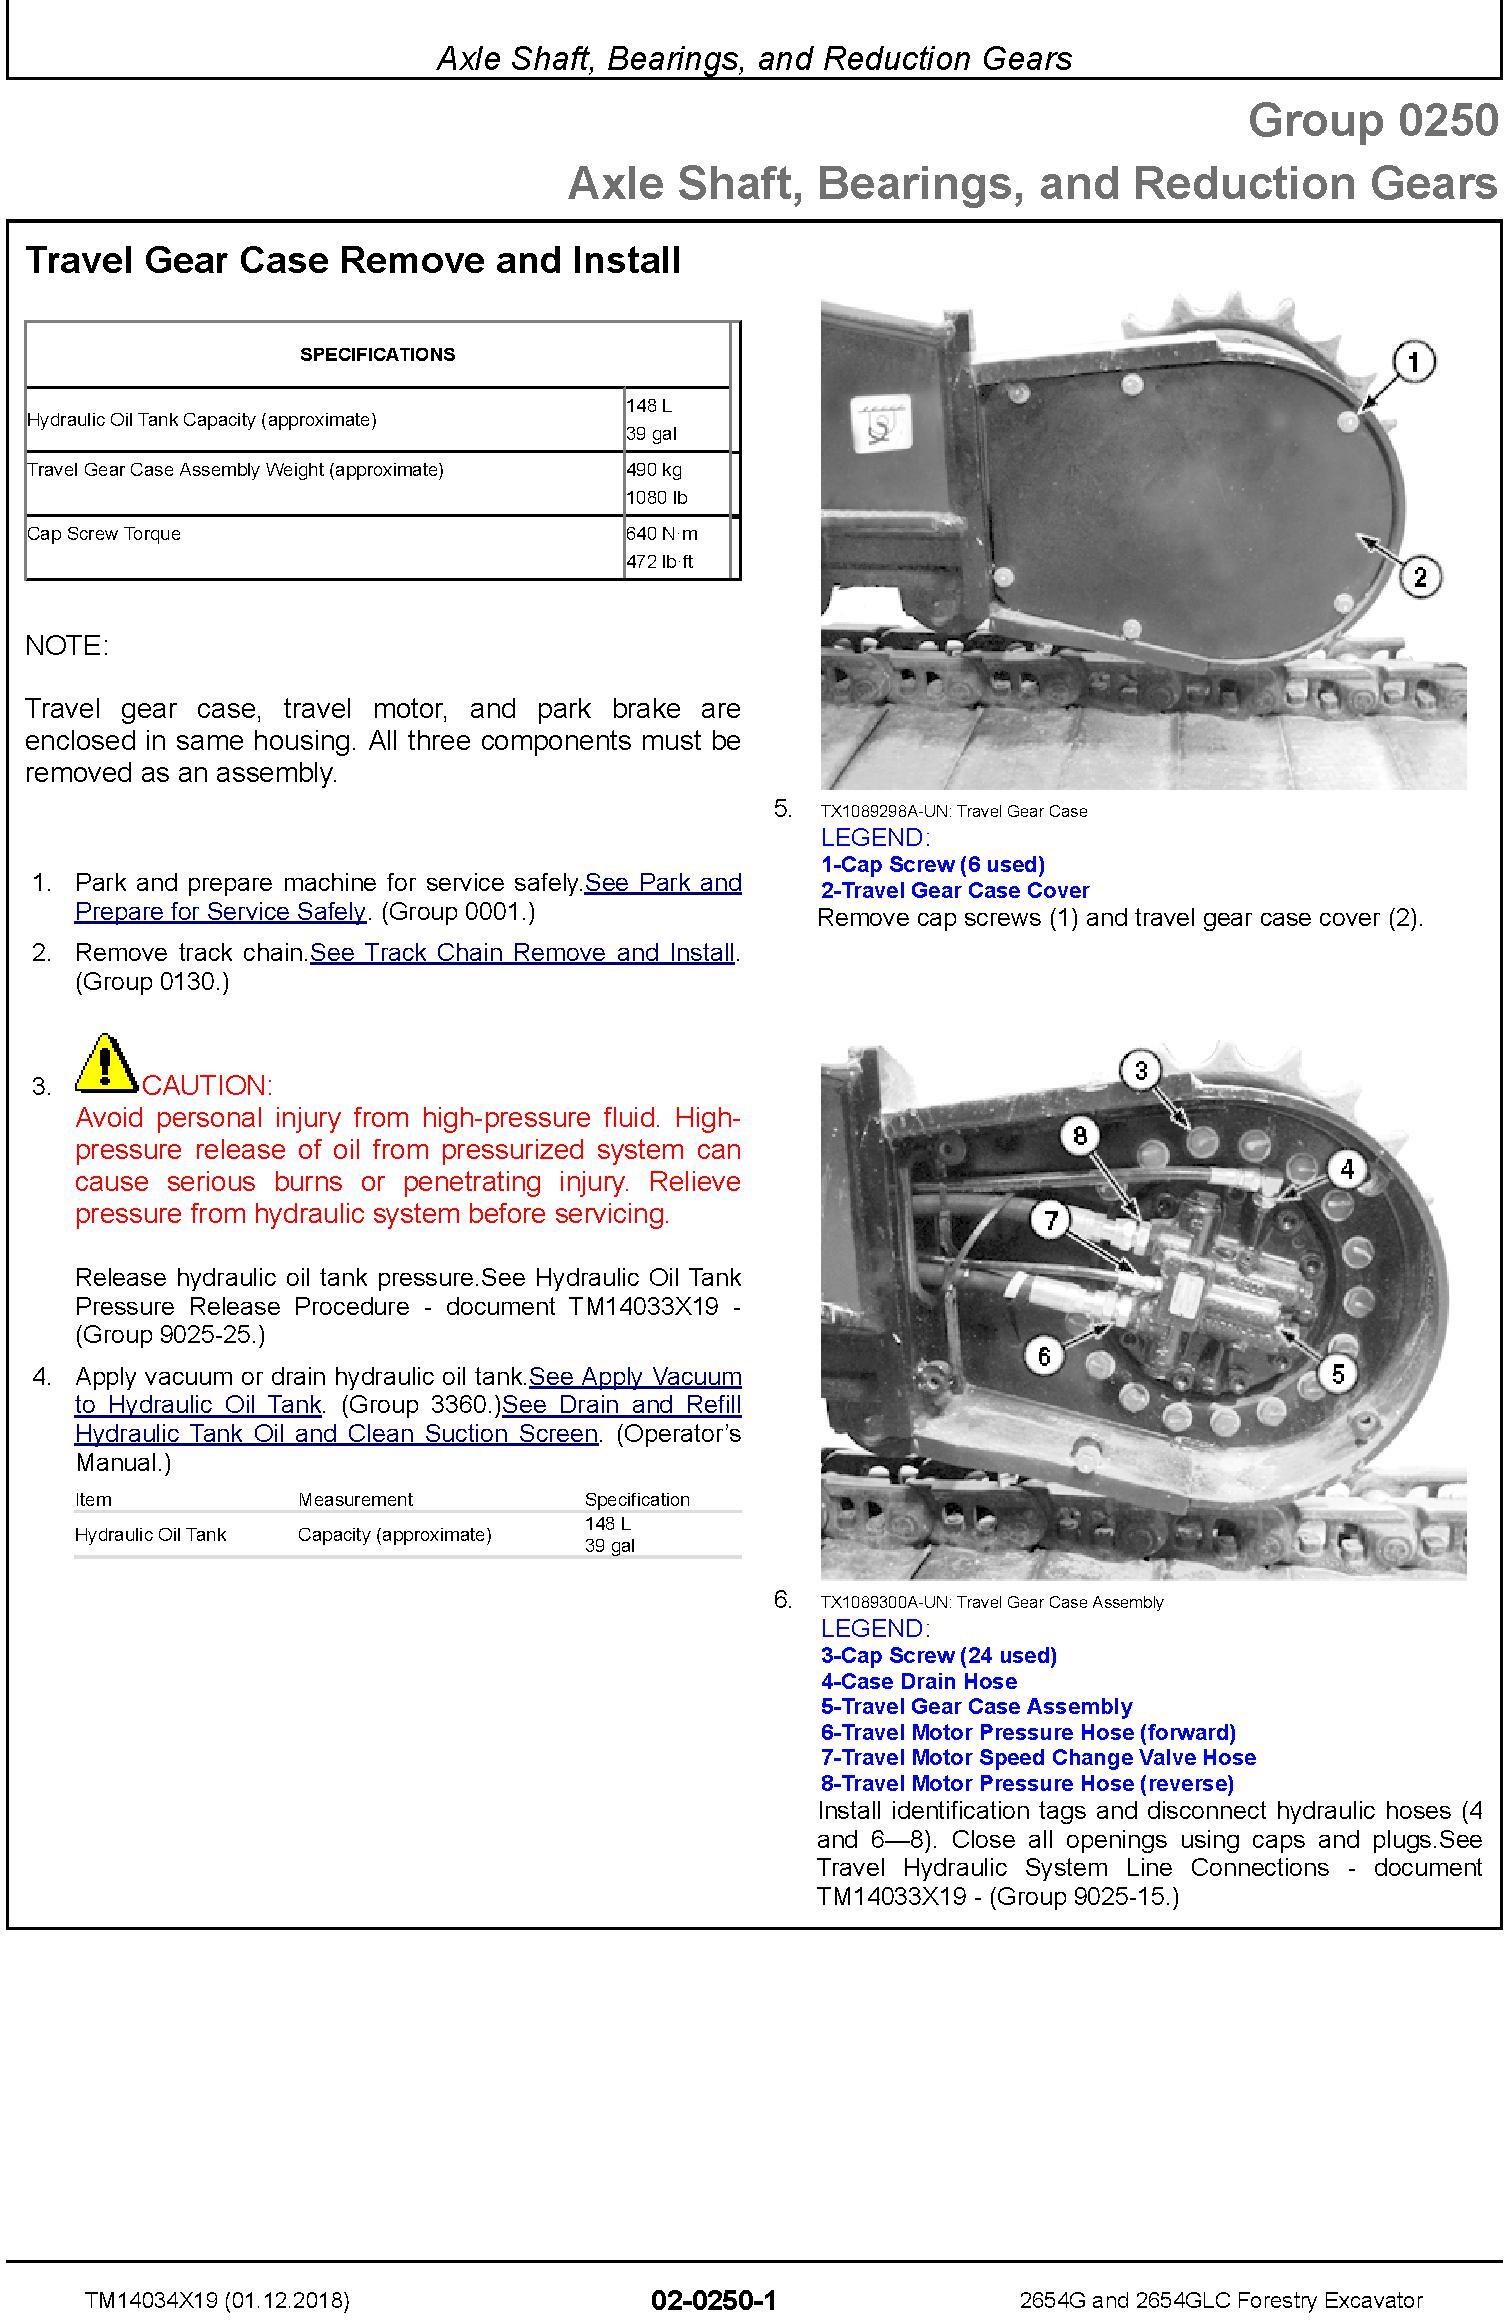 John Deere 2654G, 2654GLC (SN. F260001-) Forestry Excavator Repair Technical Manual (TM14034X19) - 2